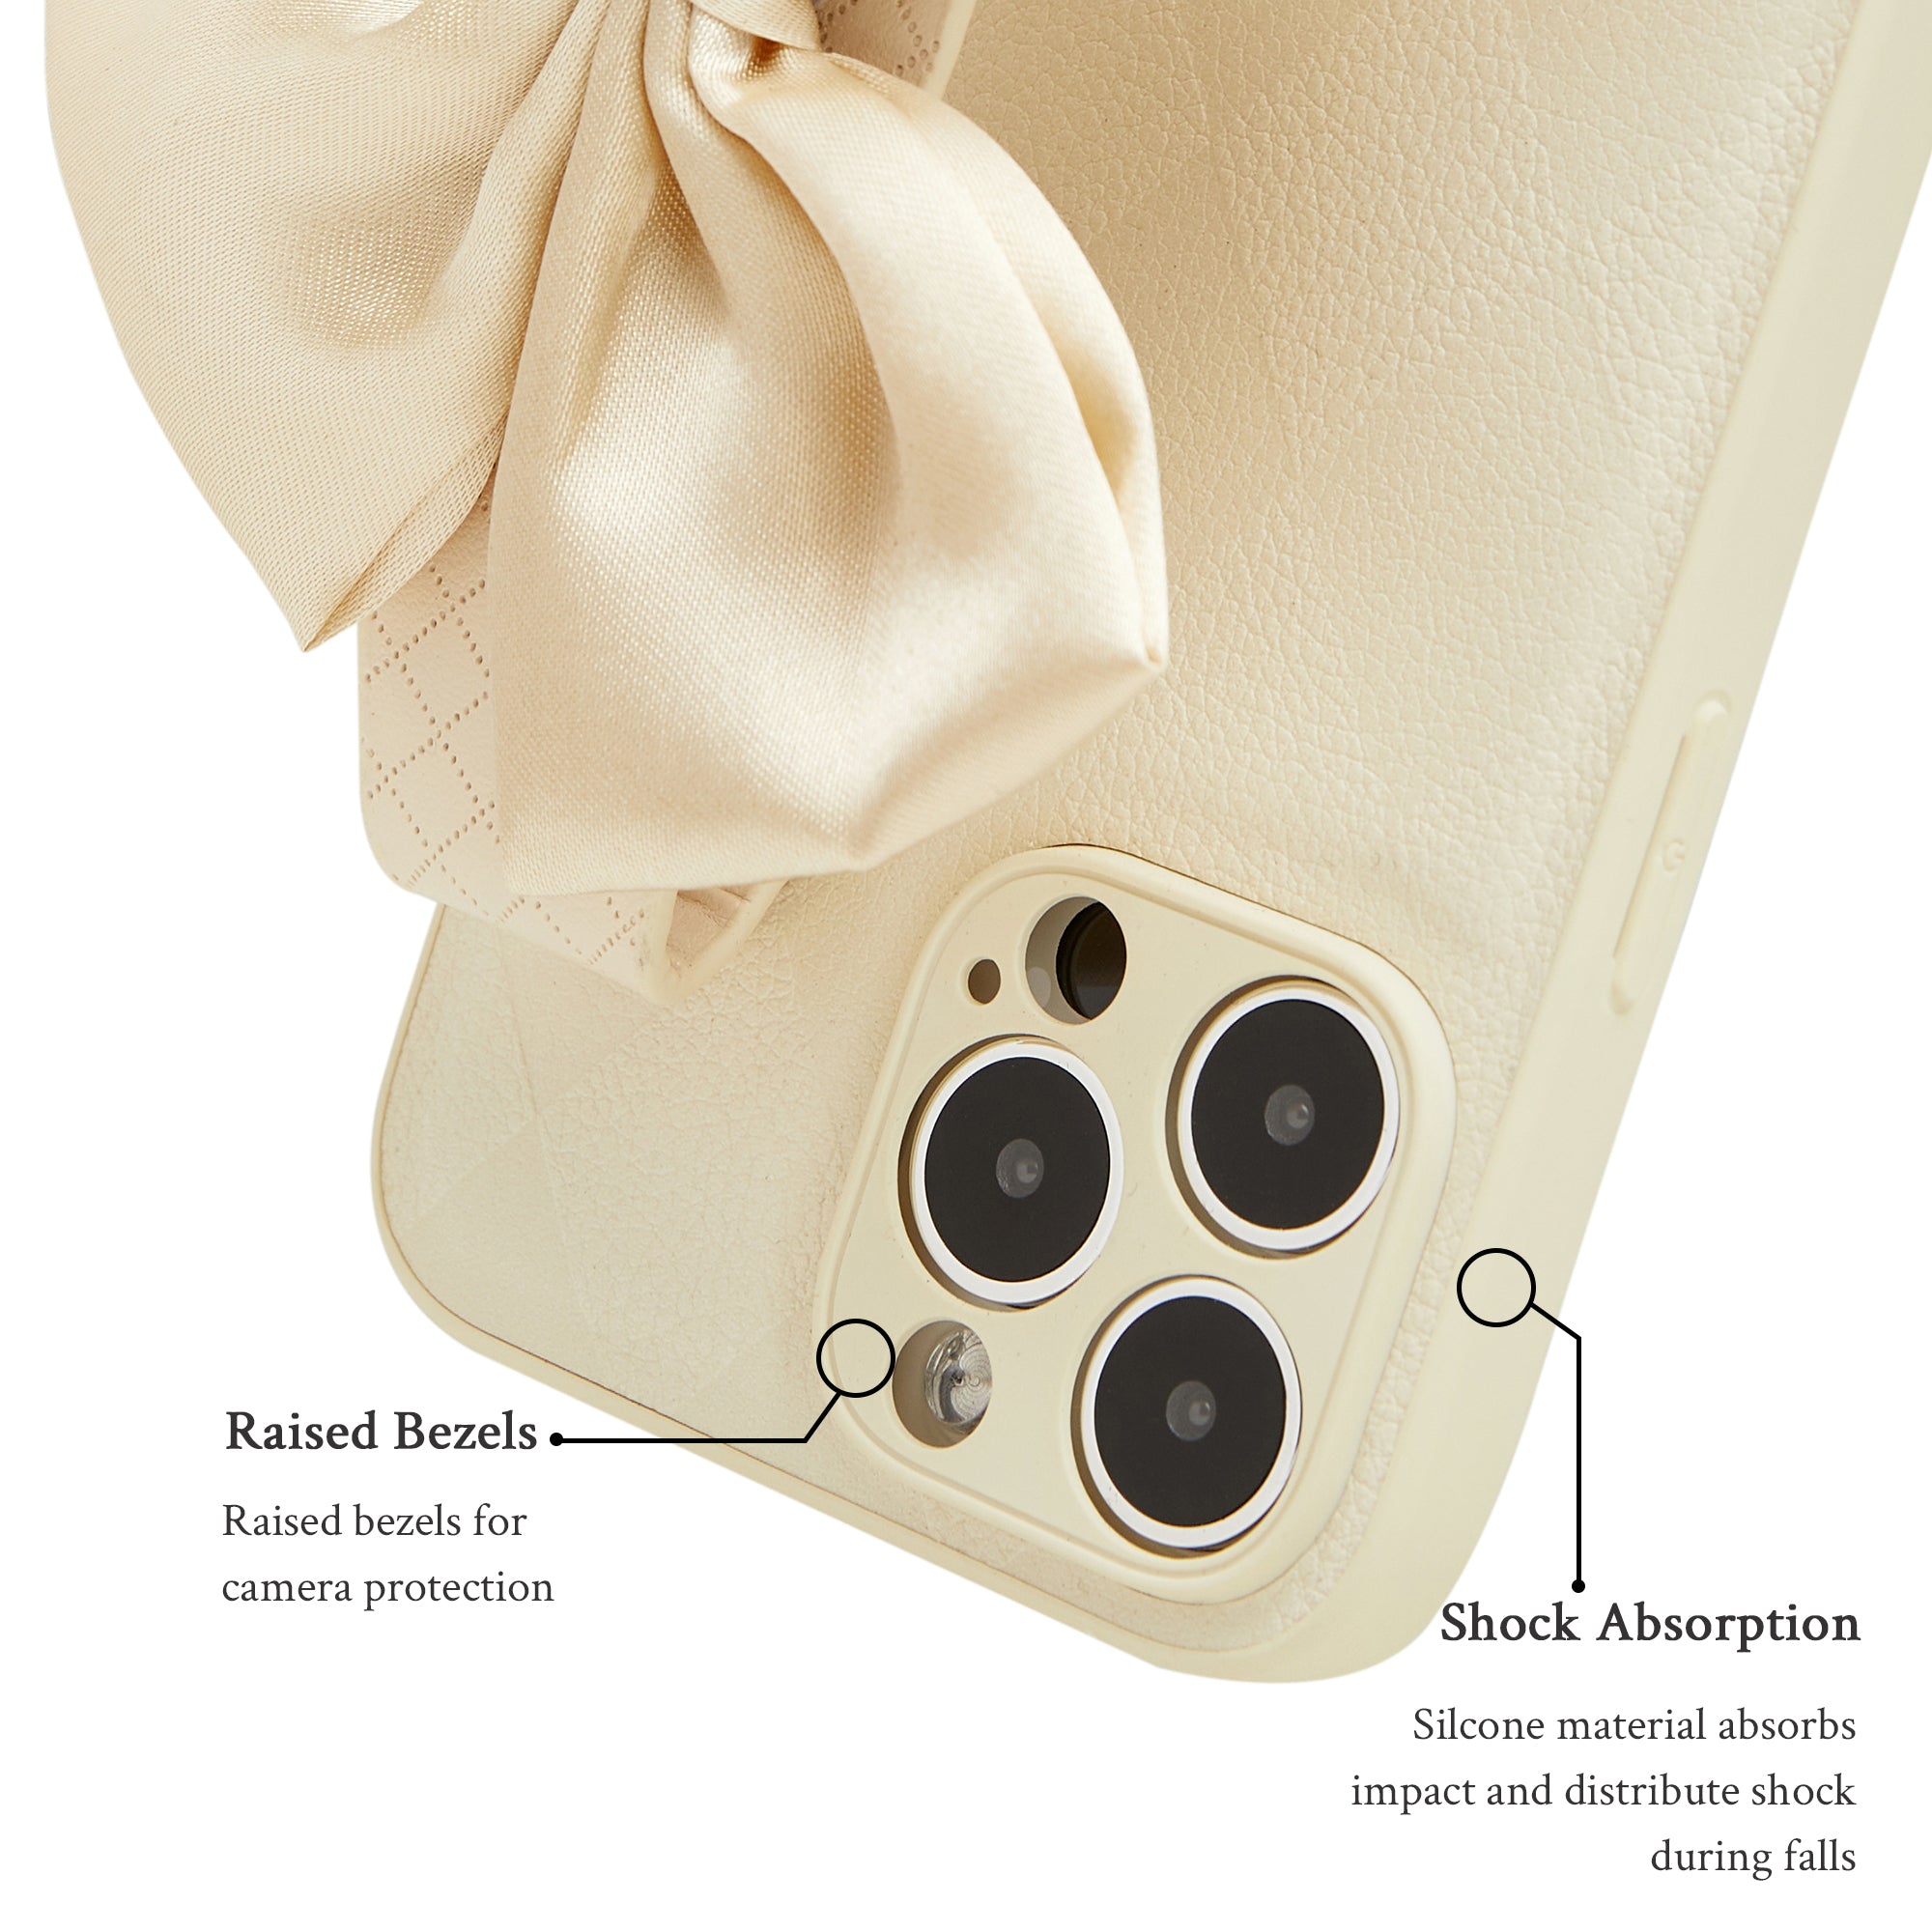 Bowknot Wristlet Phone Case